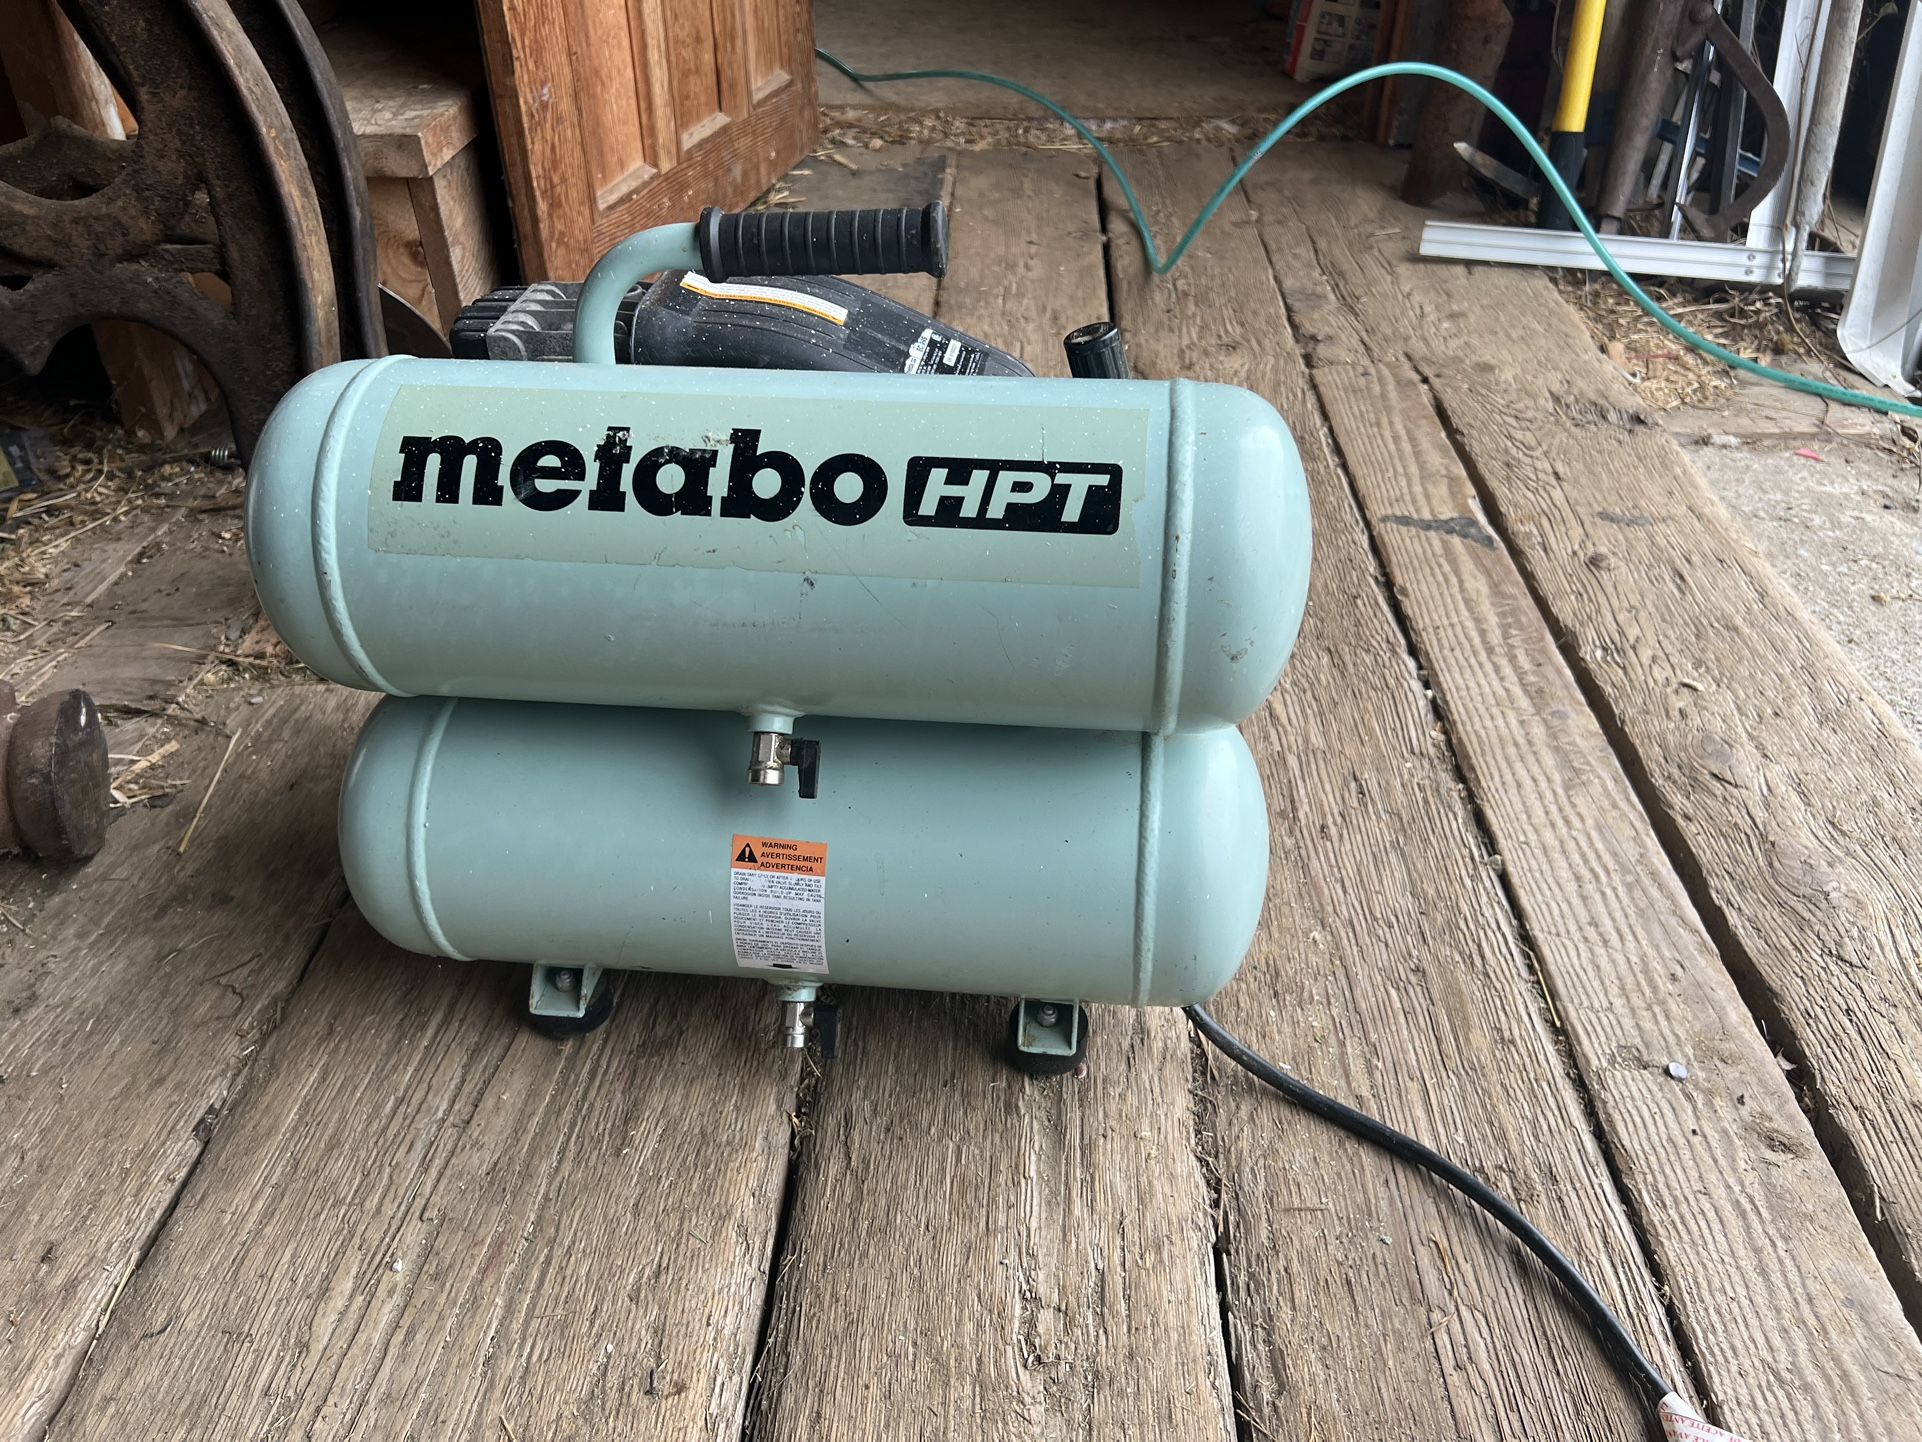 Metabo HPT 4 Gallon Air Compressor 